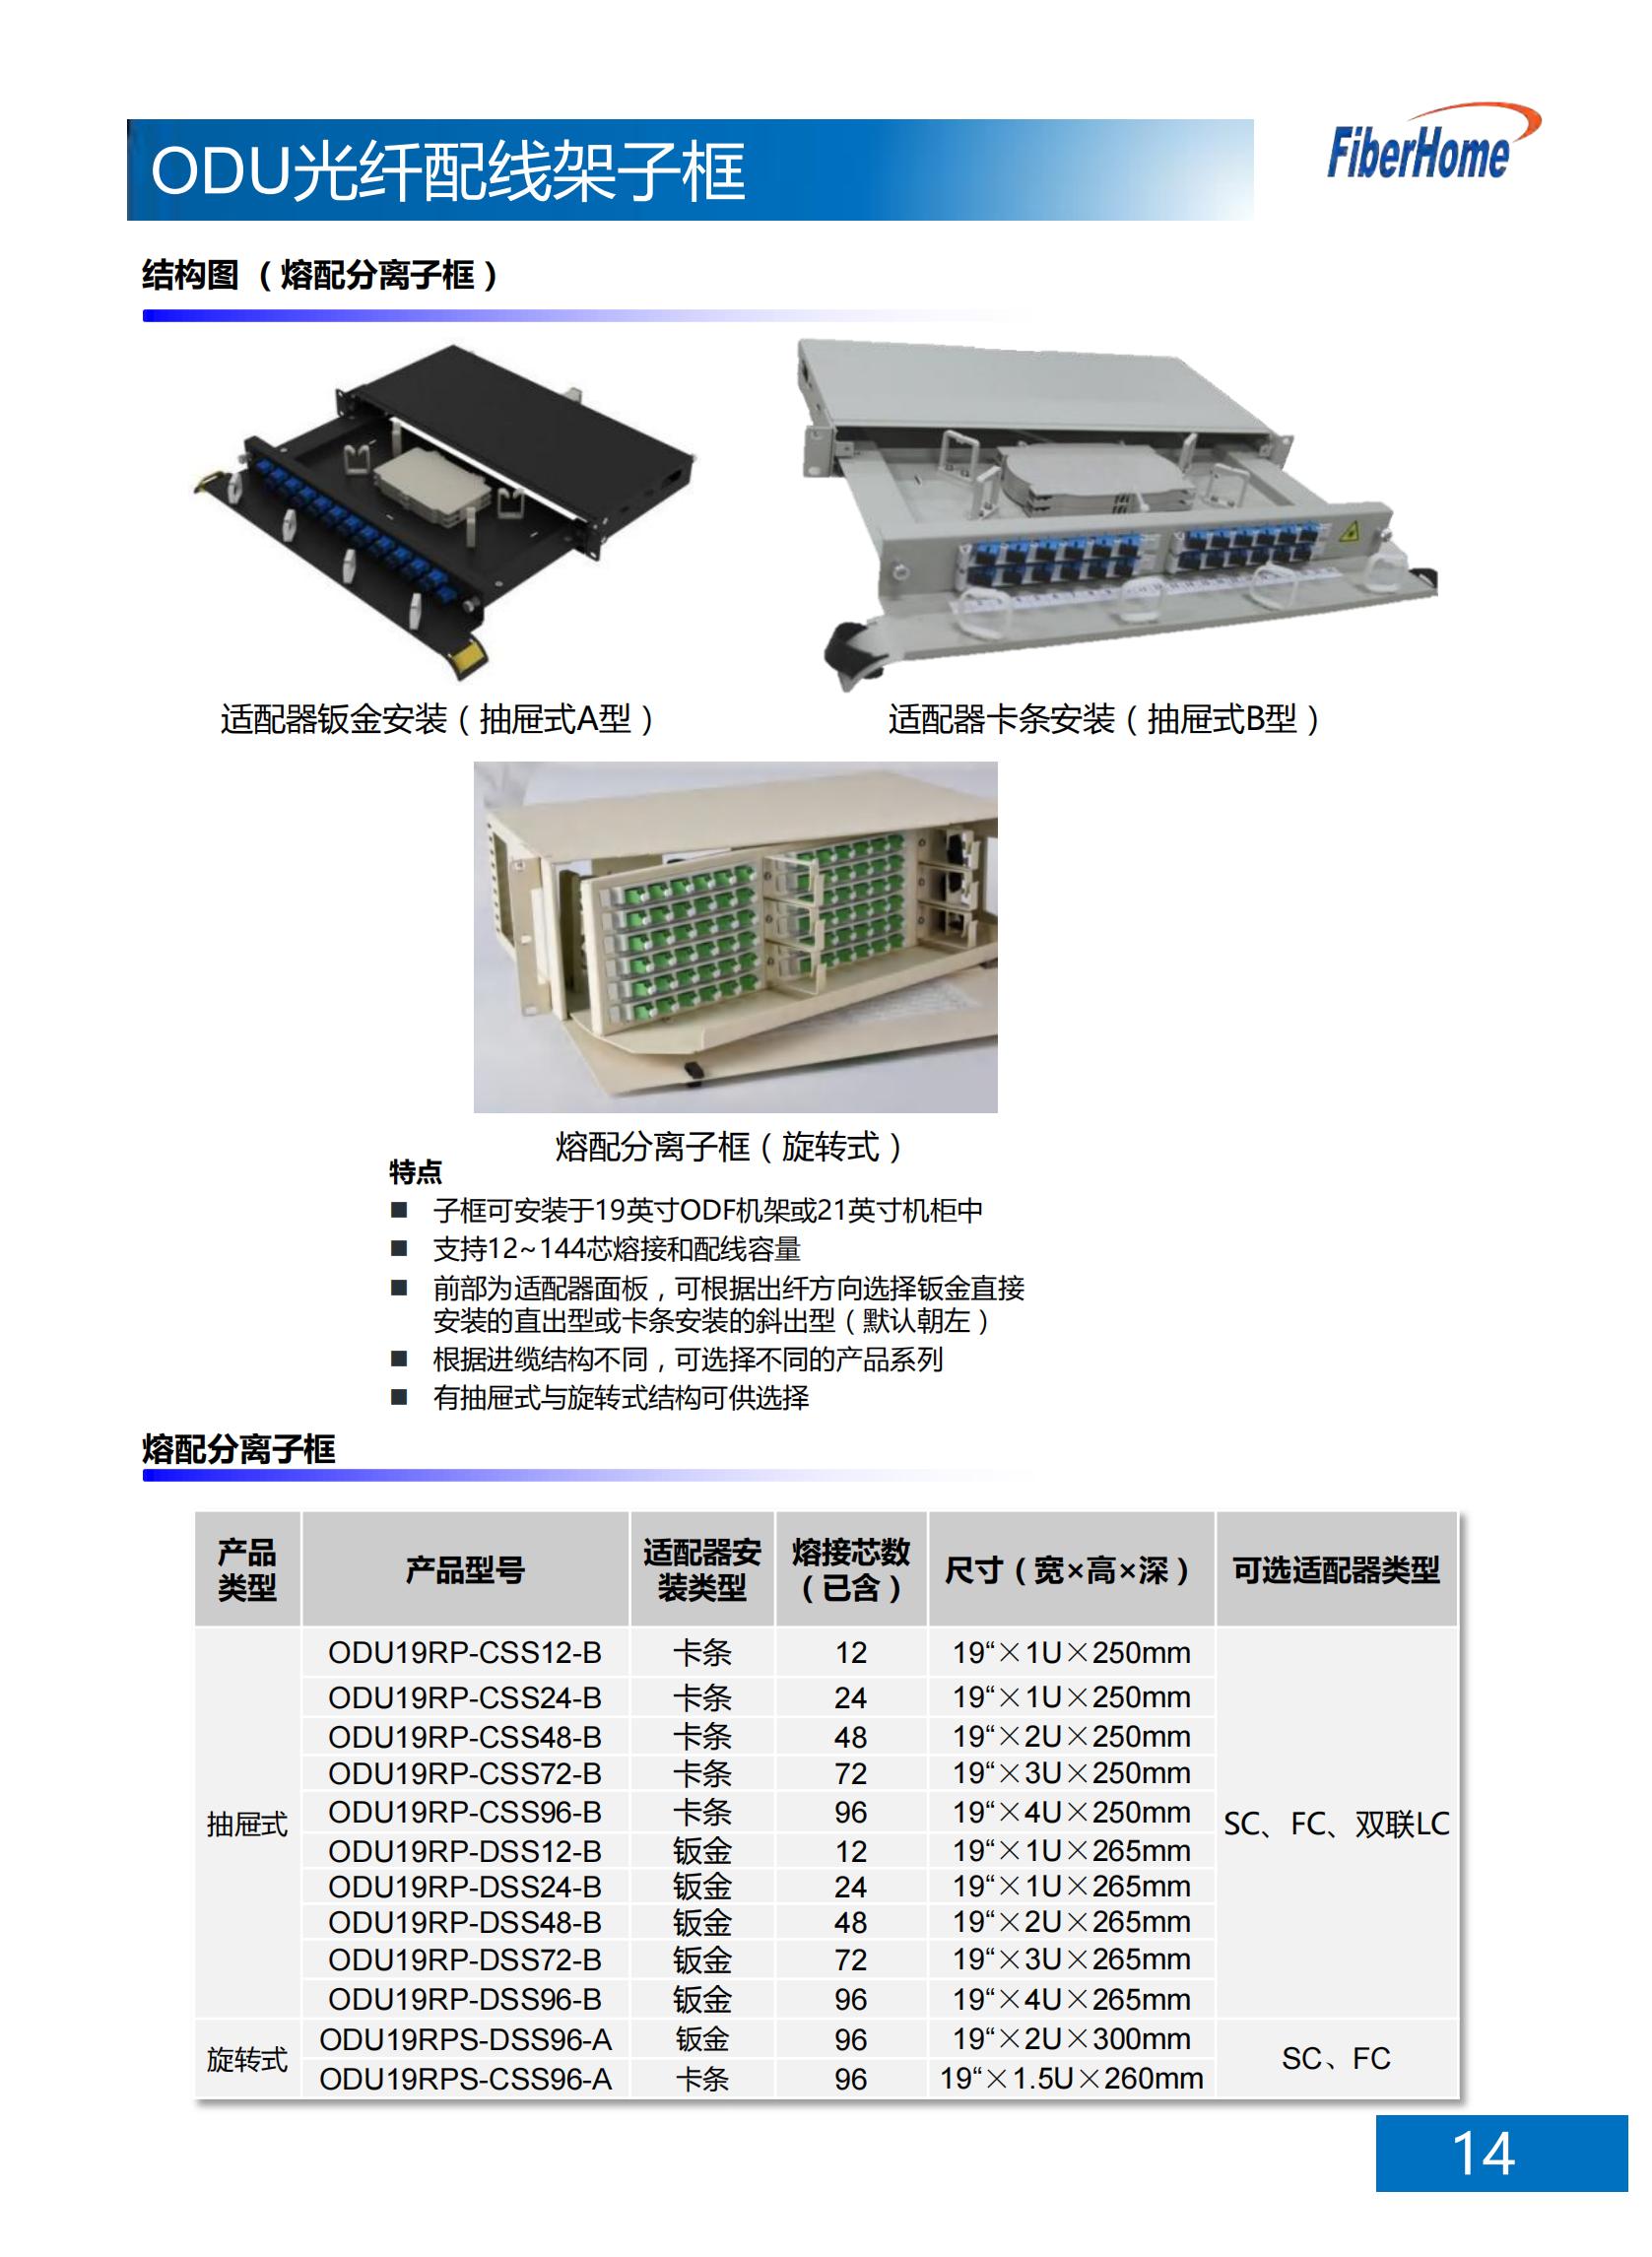 12-core ODU optical fiber distribution frame ODU19T-A12-B-SC (including 12-core SC fusion and distribution integrated unit*1)